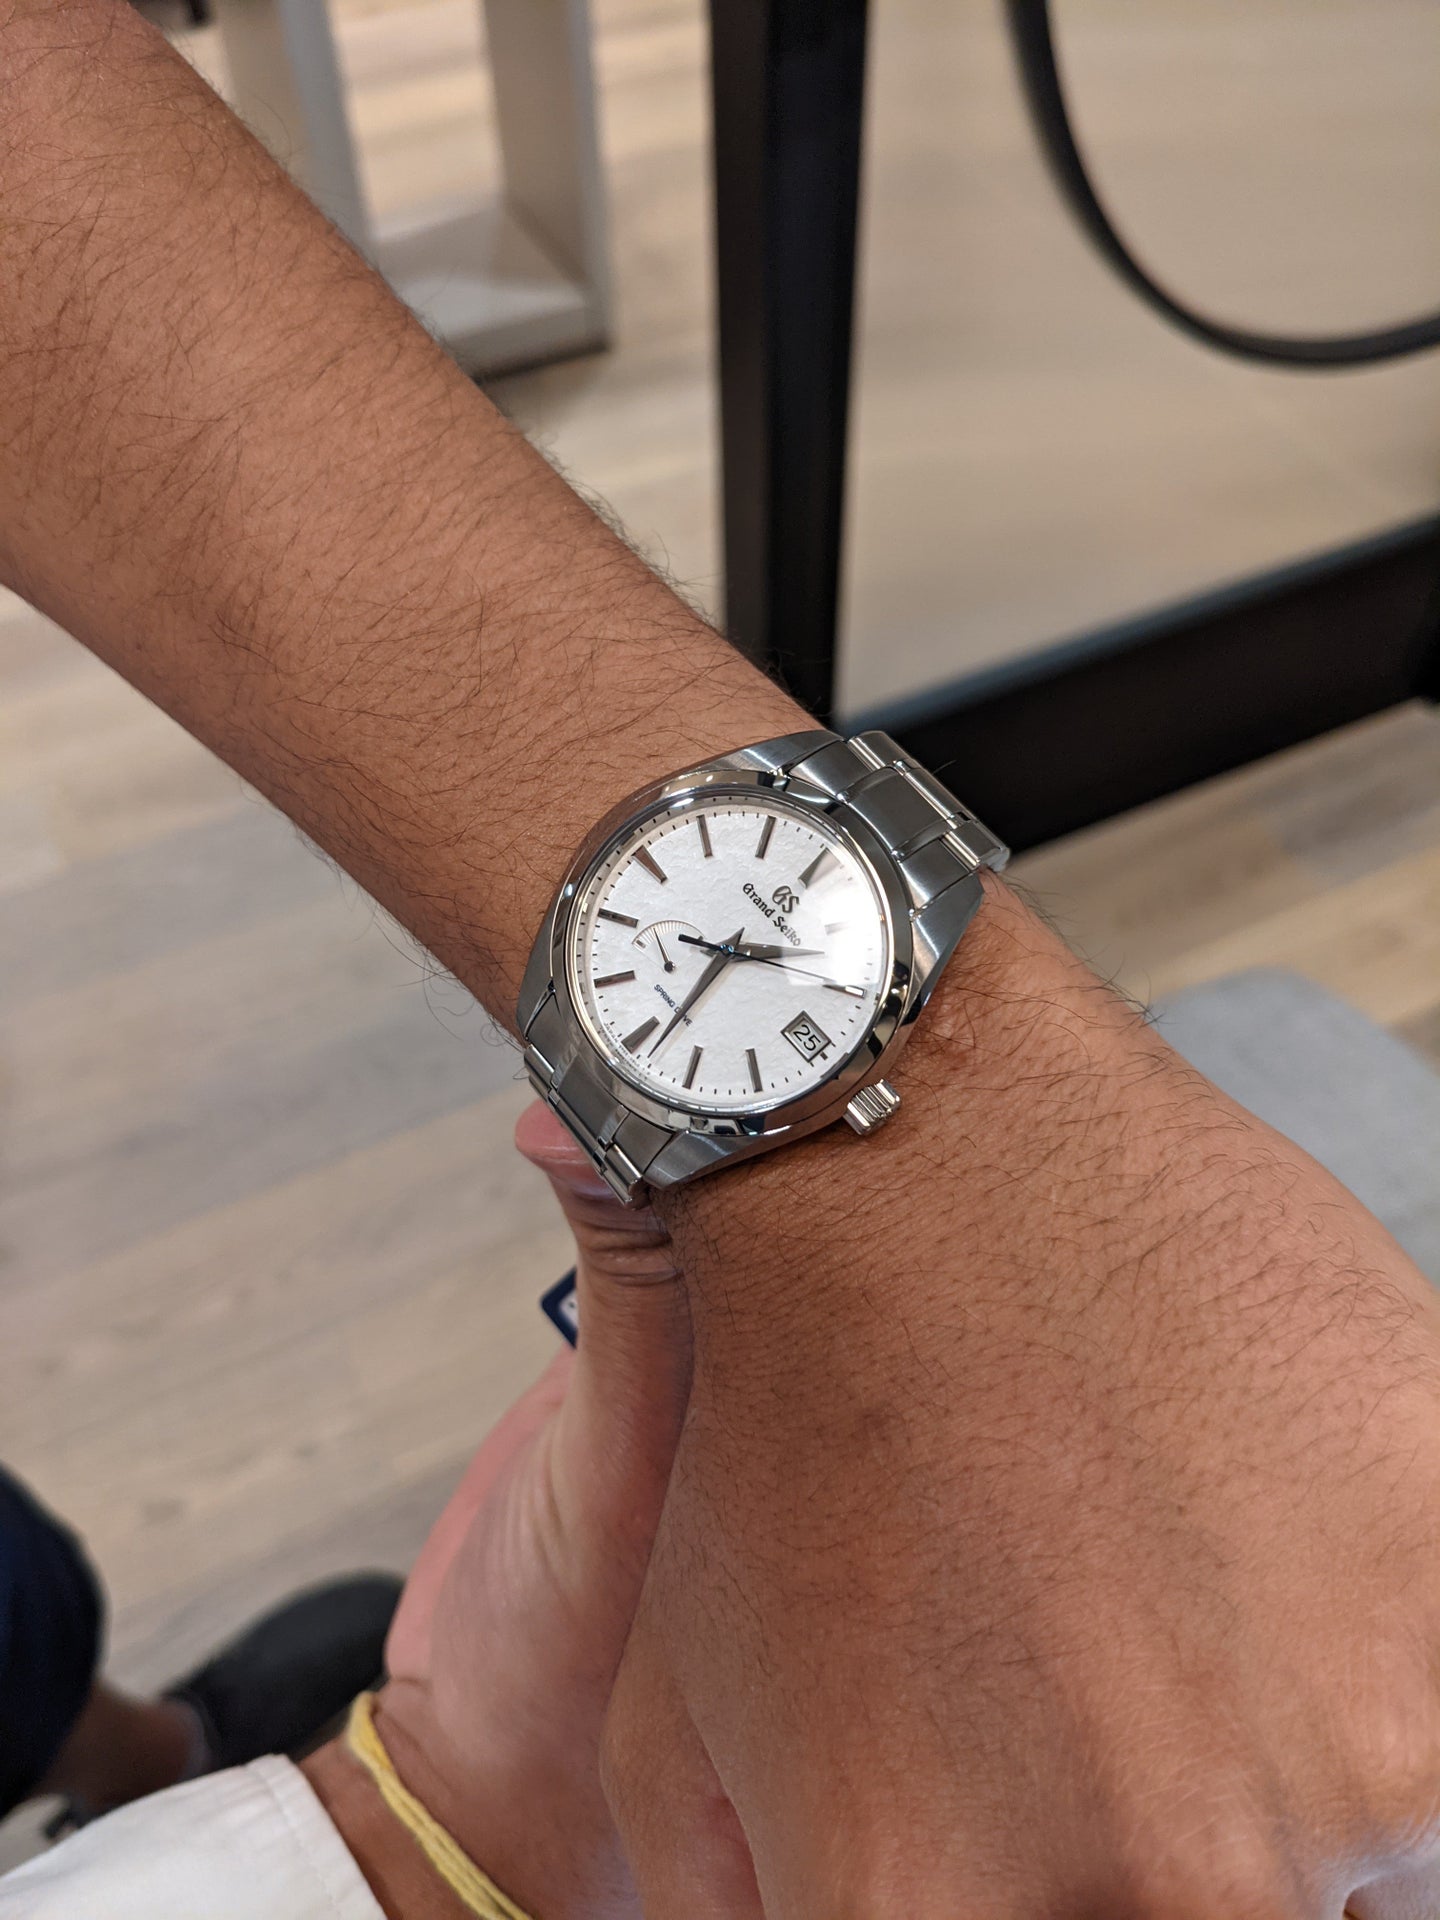 How does the Snowflake look on my wrist? | WatchUSeek Watch Forums